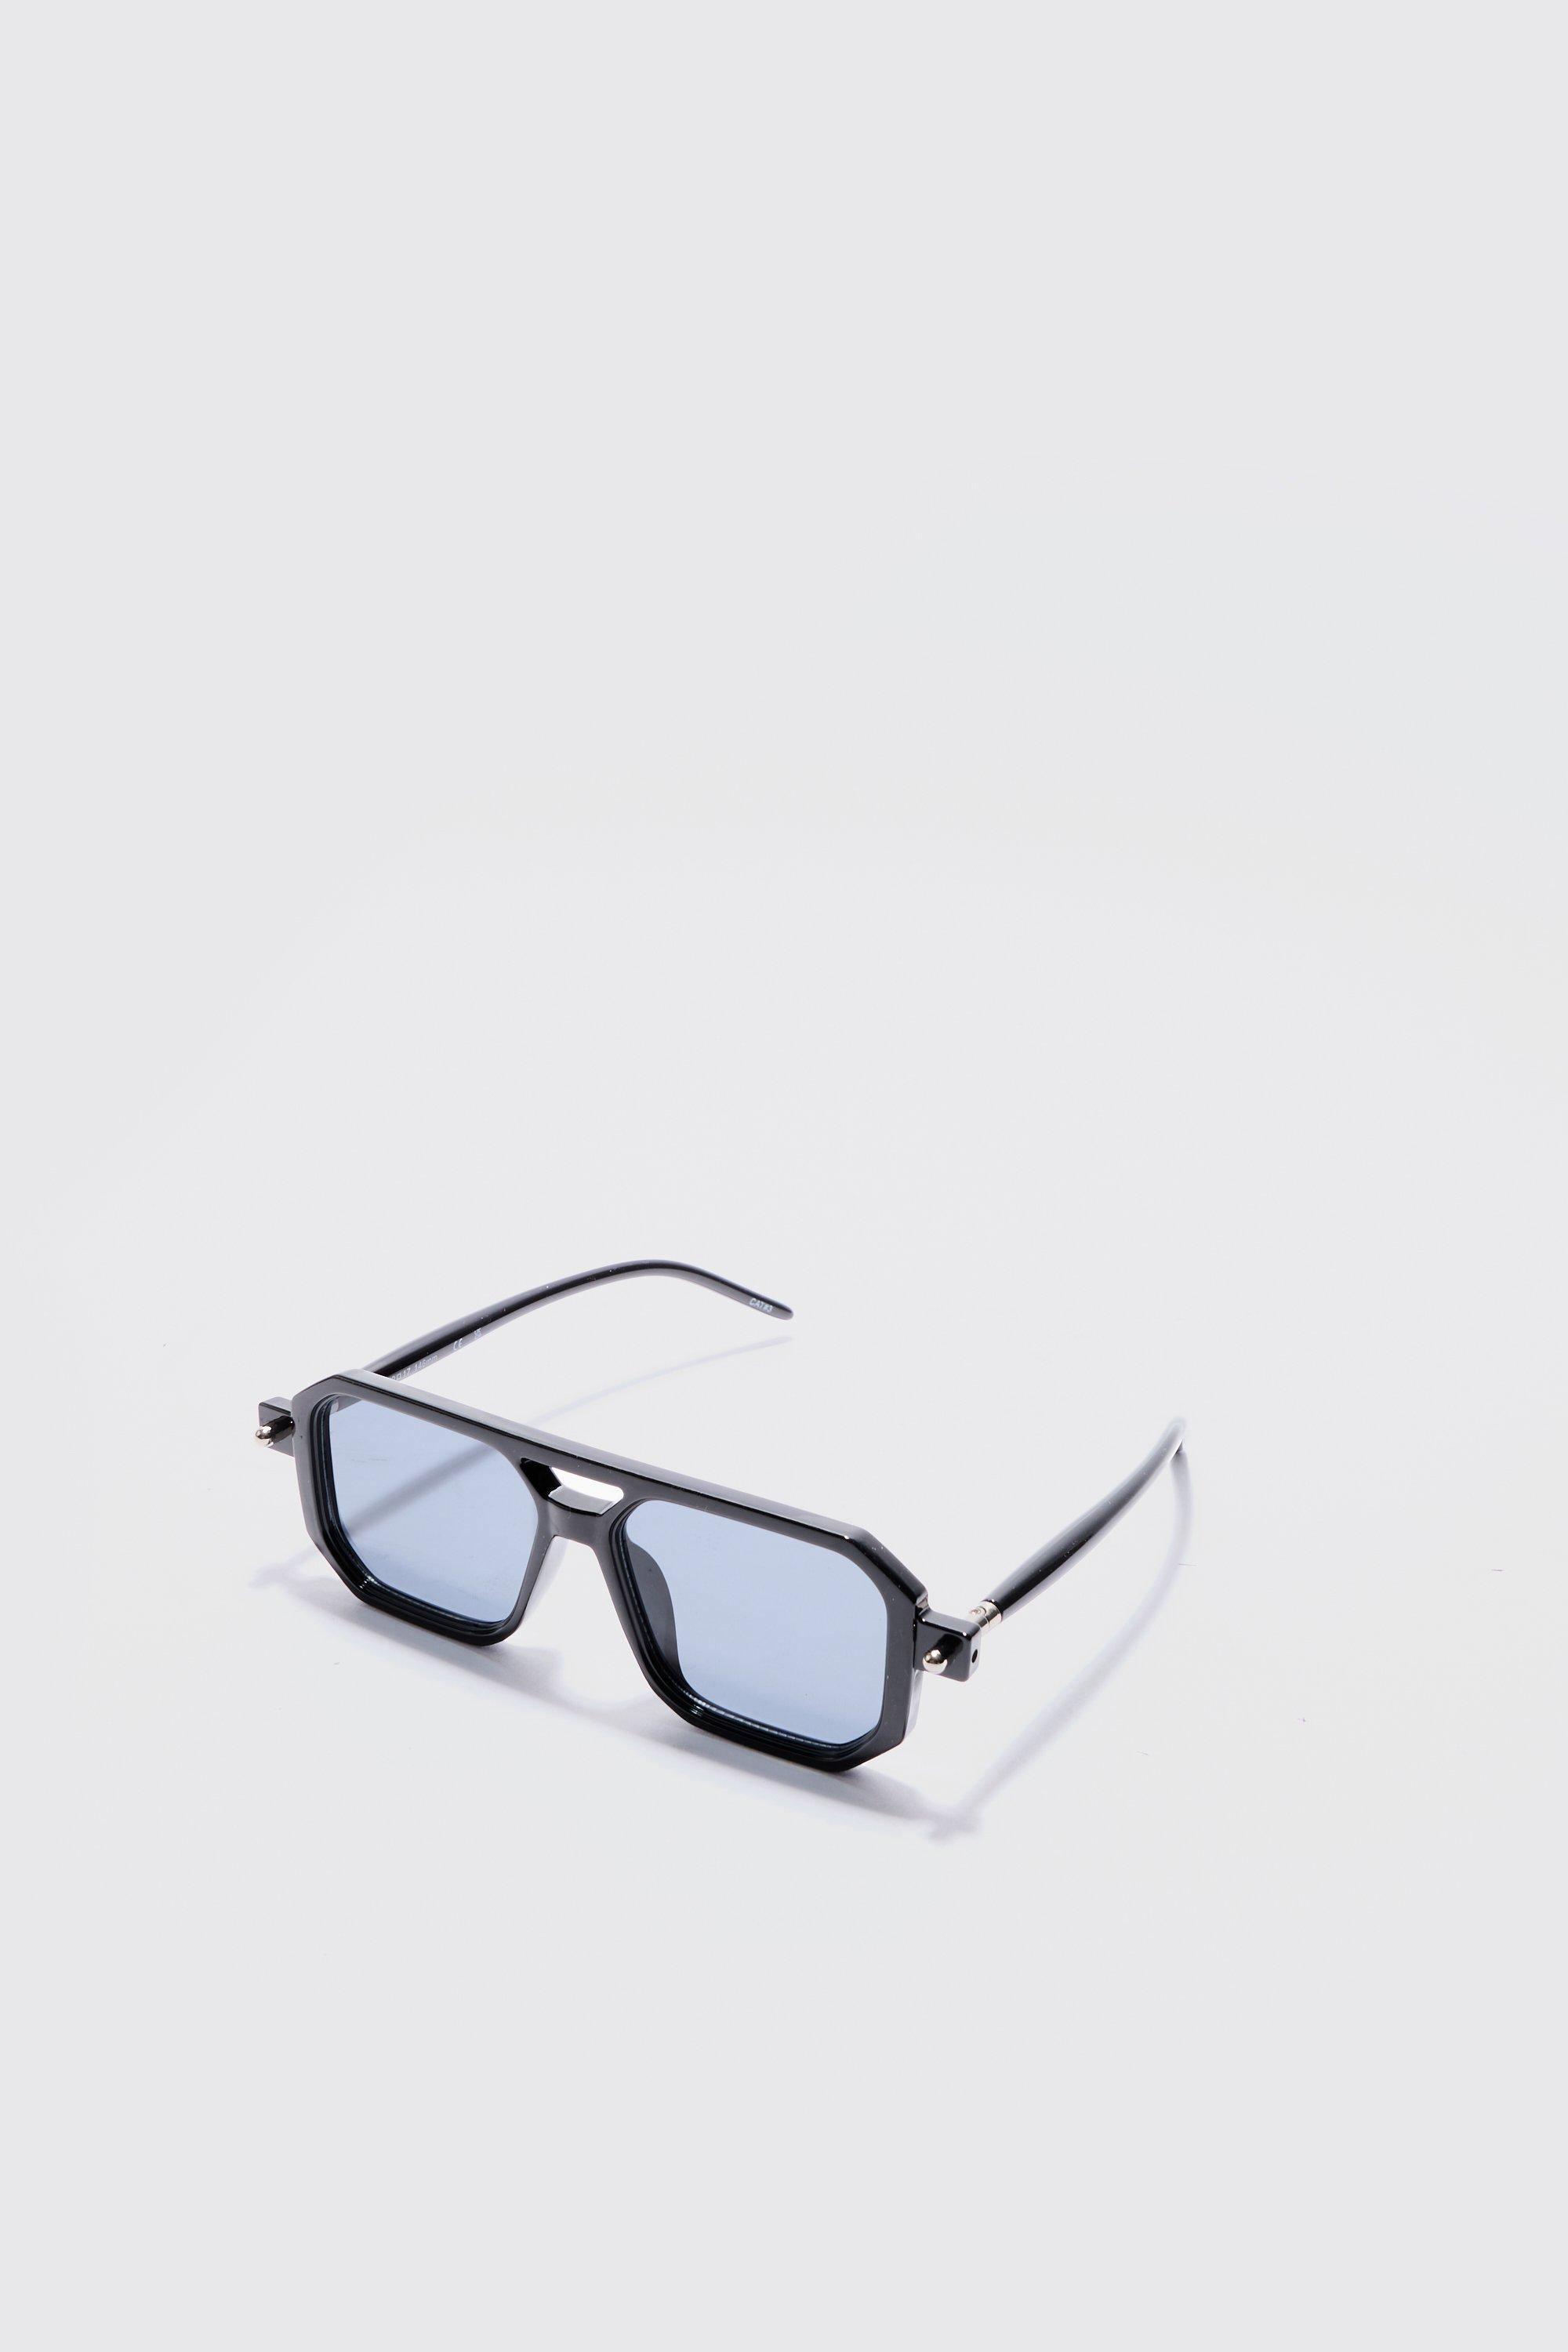 Image of Aviator Sunglasses In Black, Nero